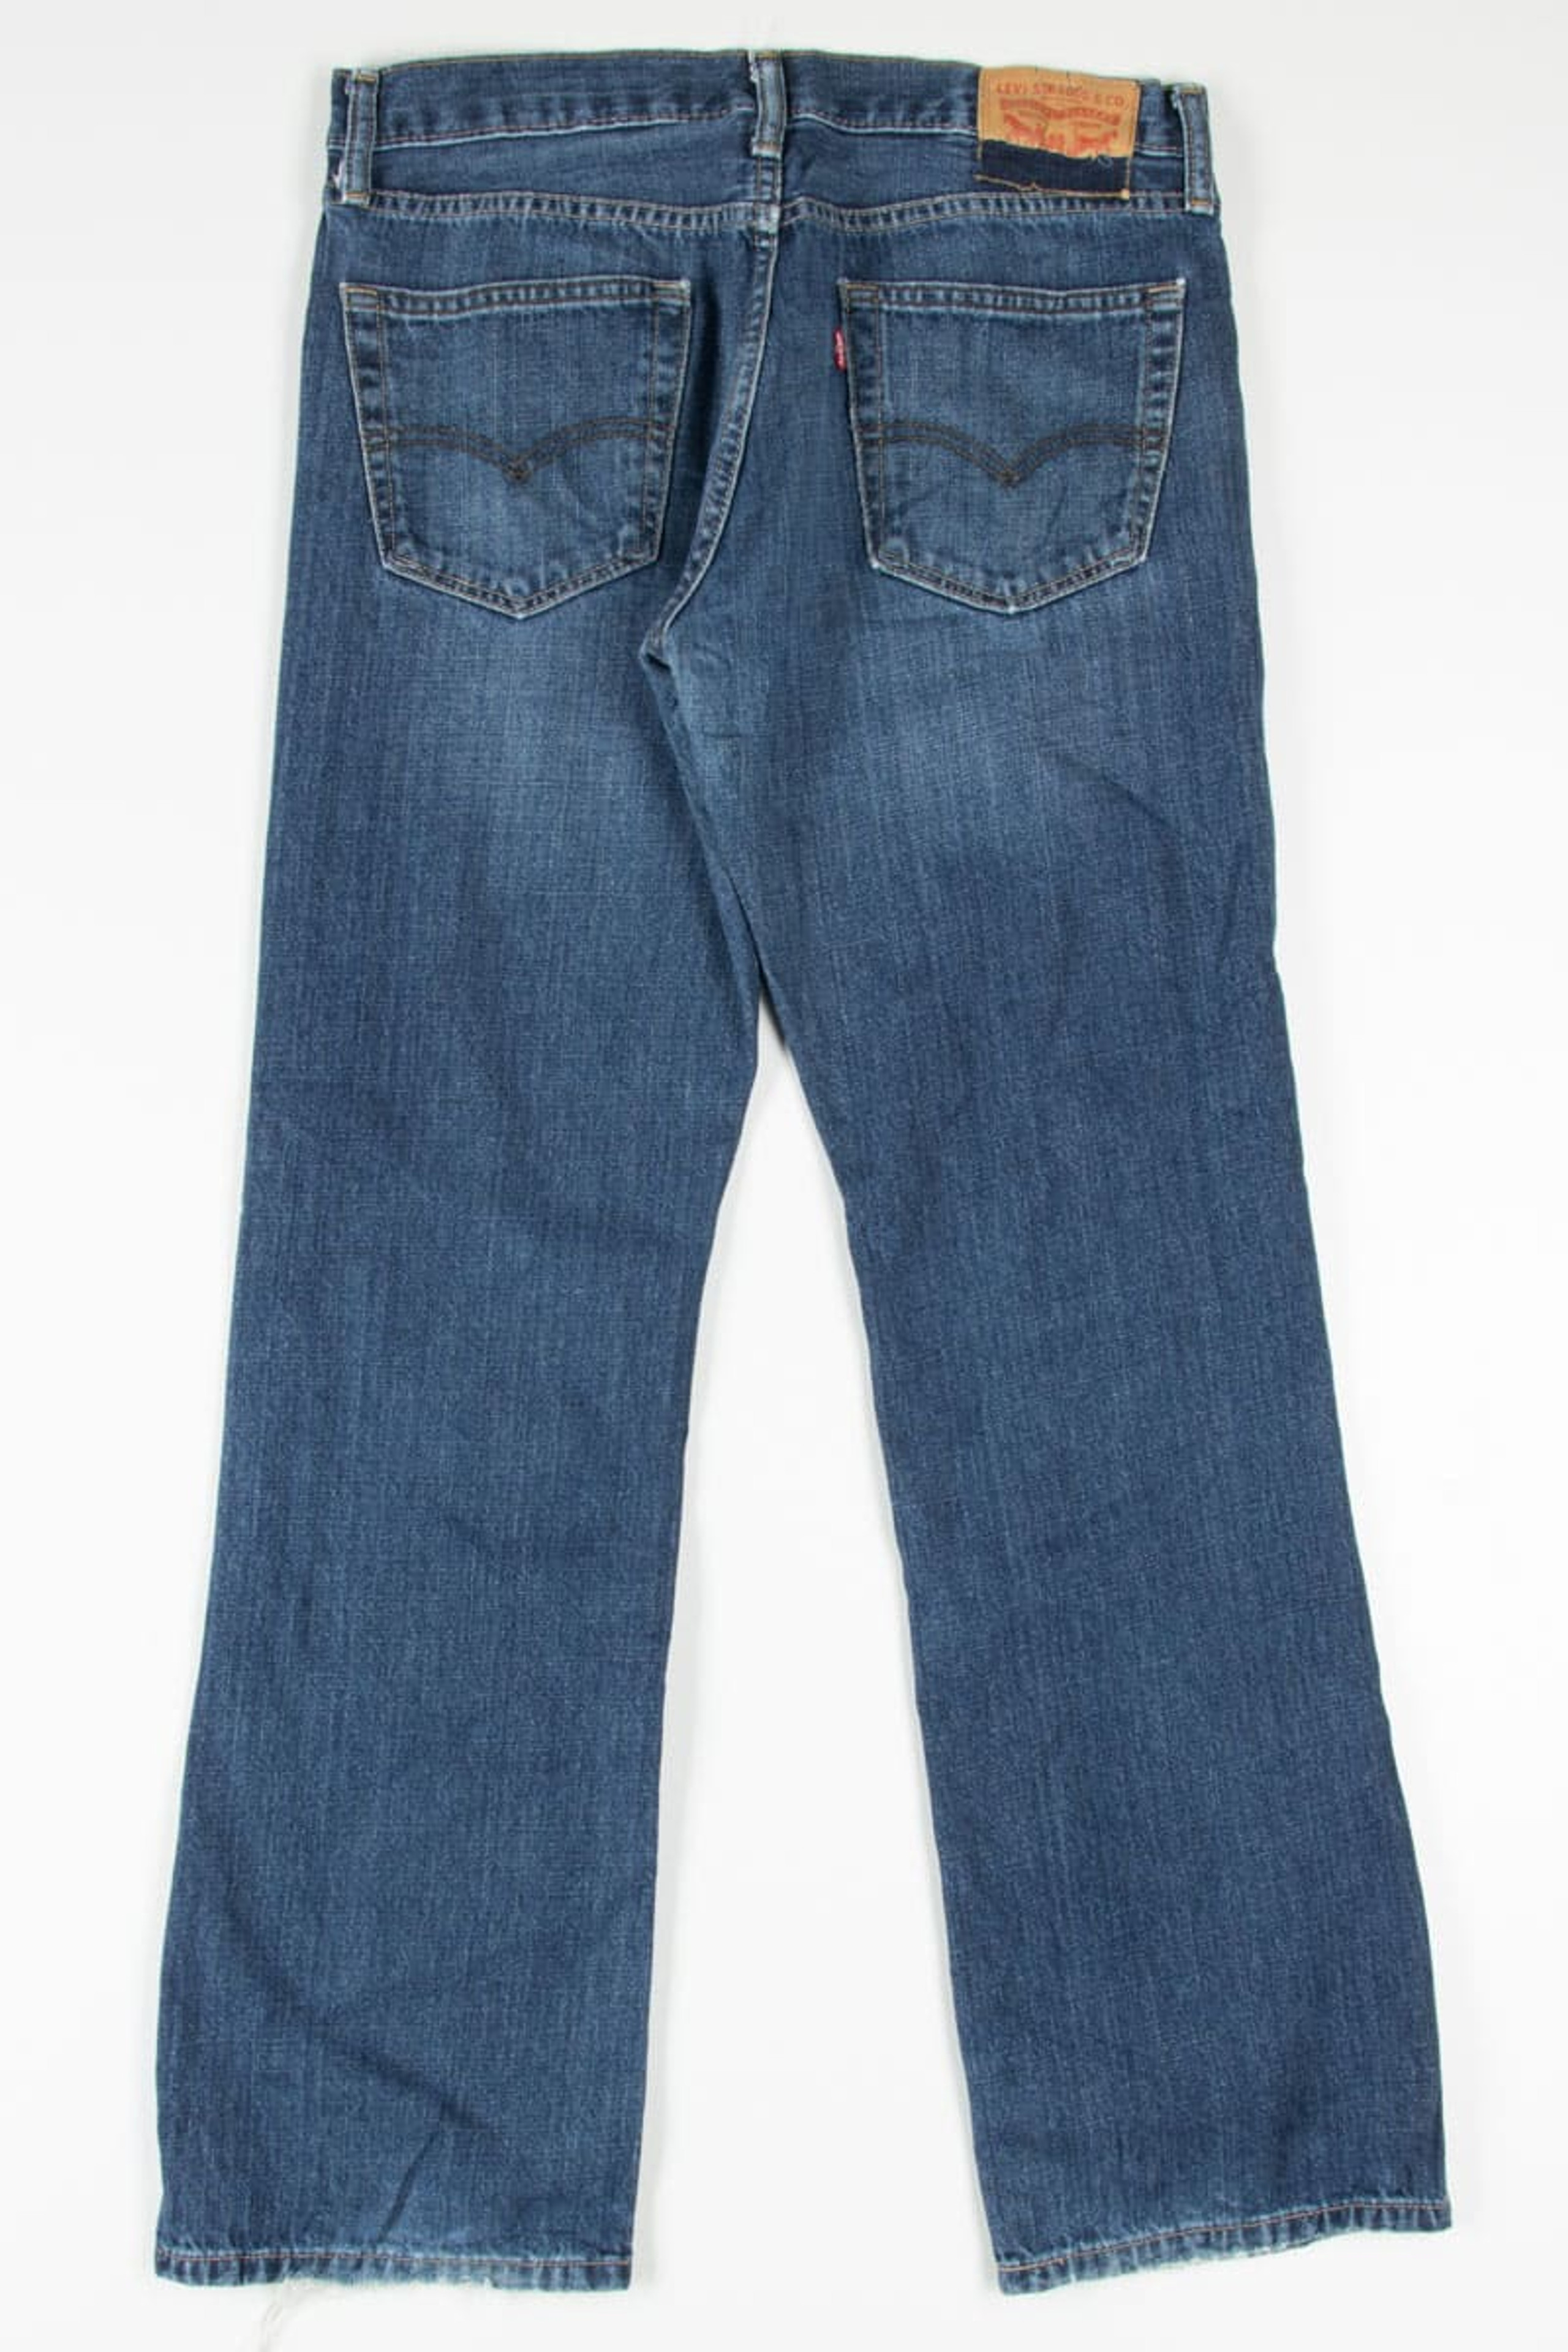 Levi's 501 Denim Jeans 615 (sz. 34W 36L) - Ragstock.com